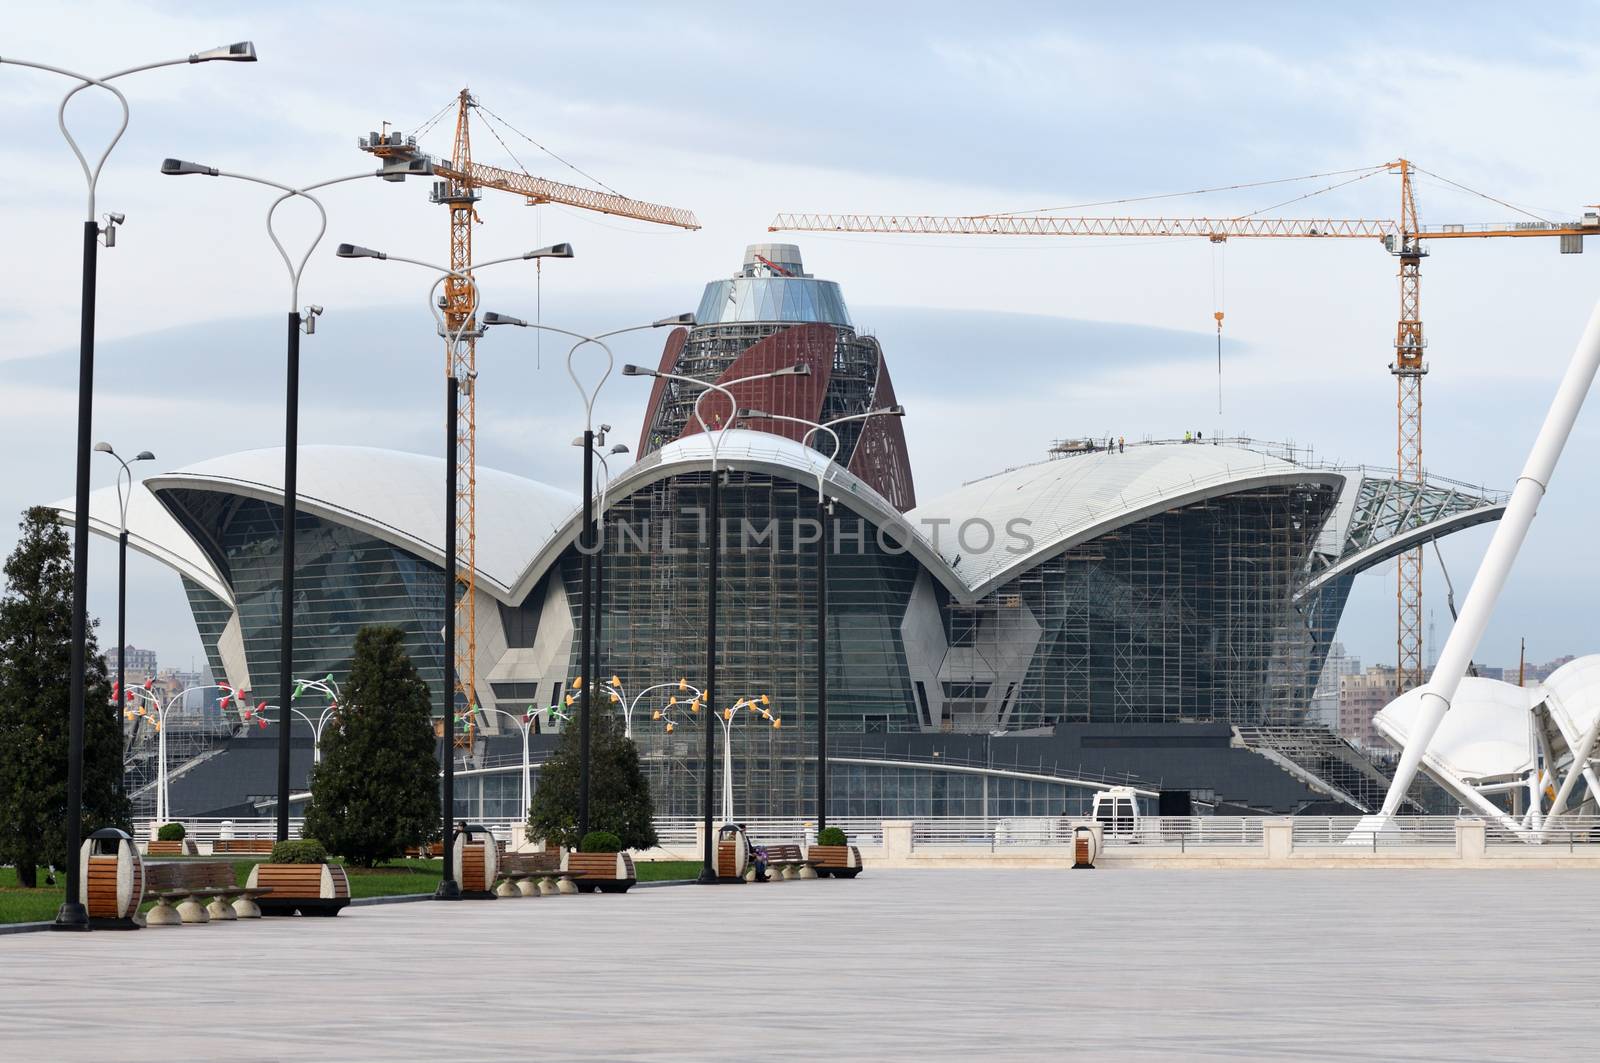 The Caspian Waterfront Mall is located on the shore of the Caspian Sea, in Azerbaijan's Baku st.